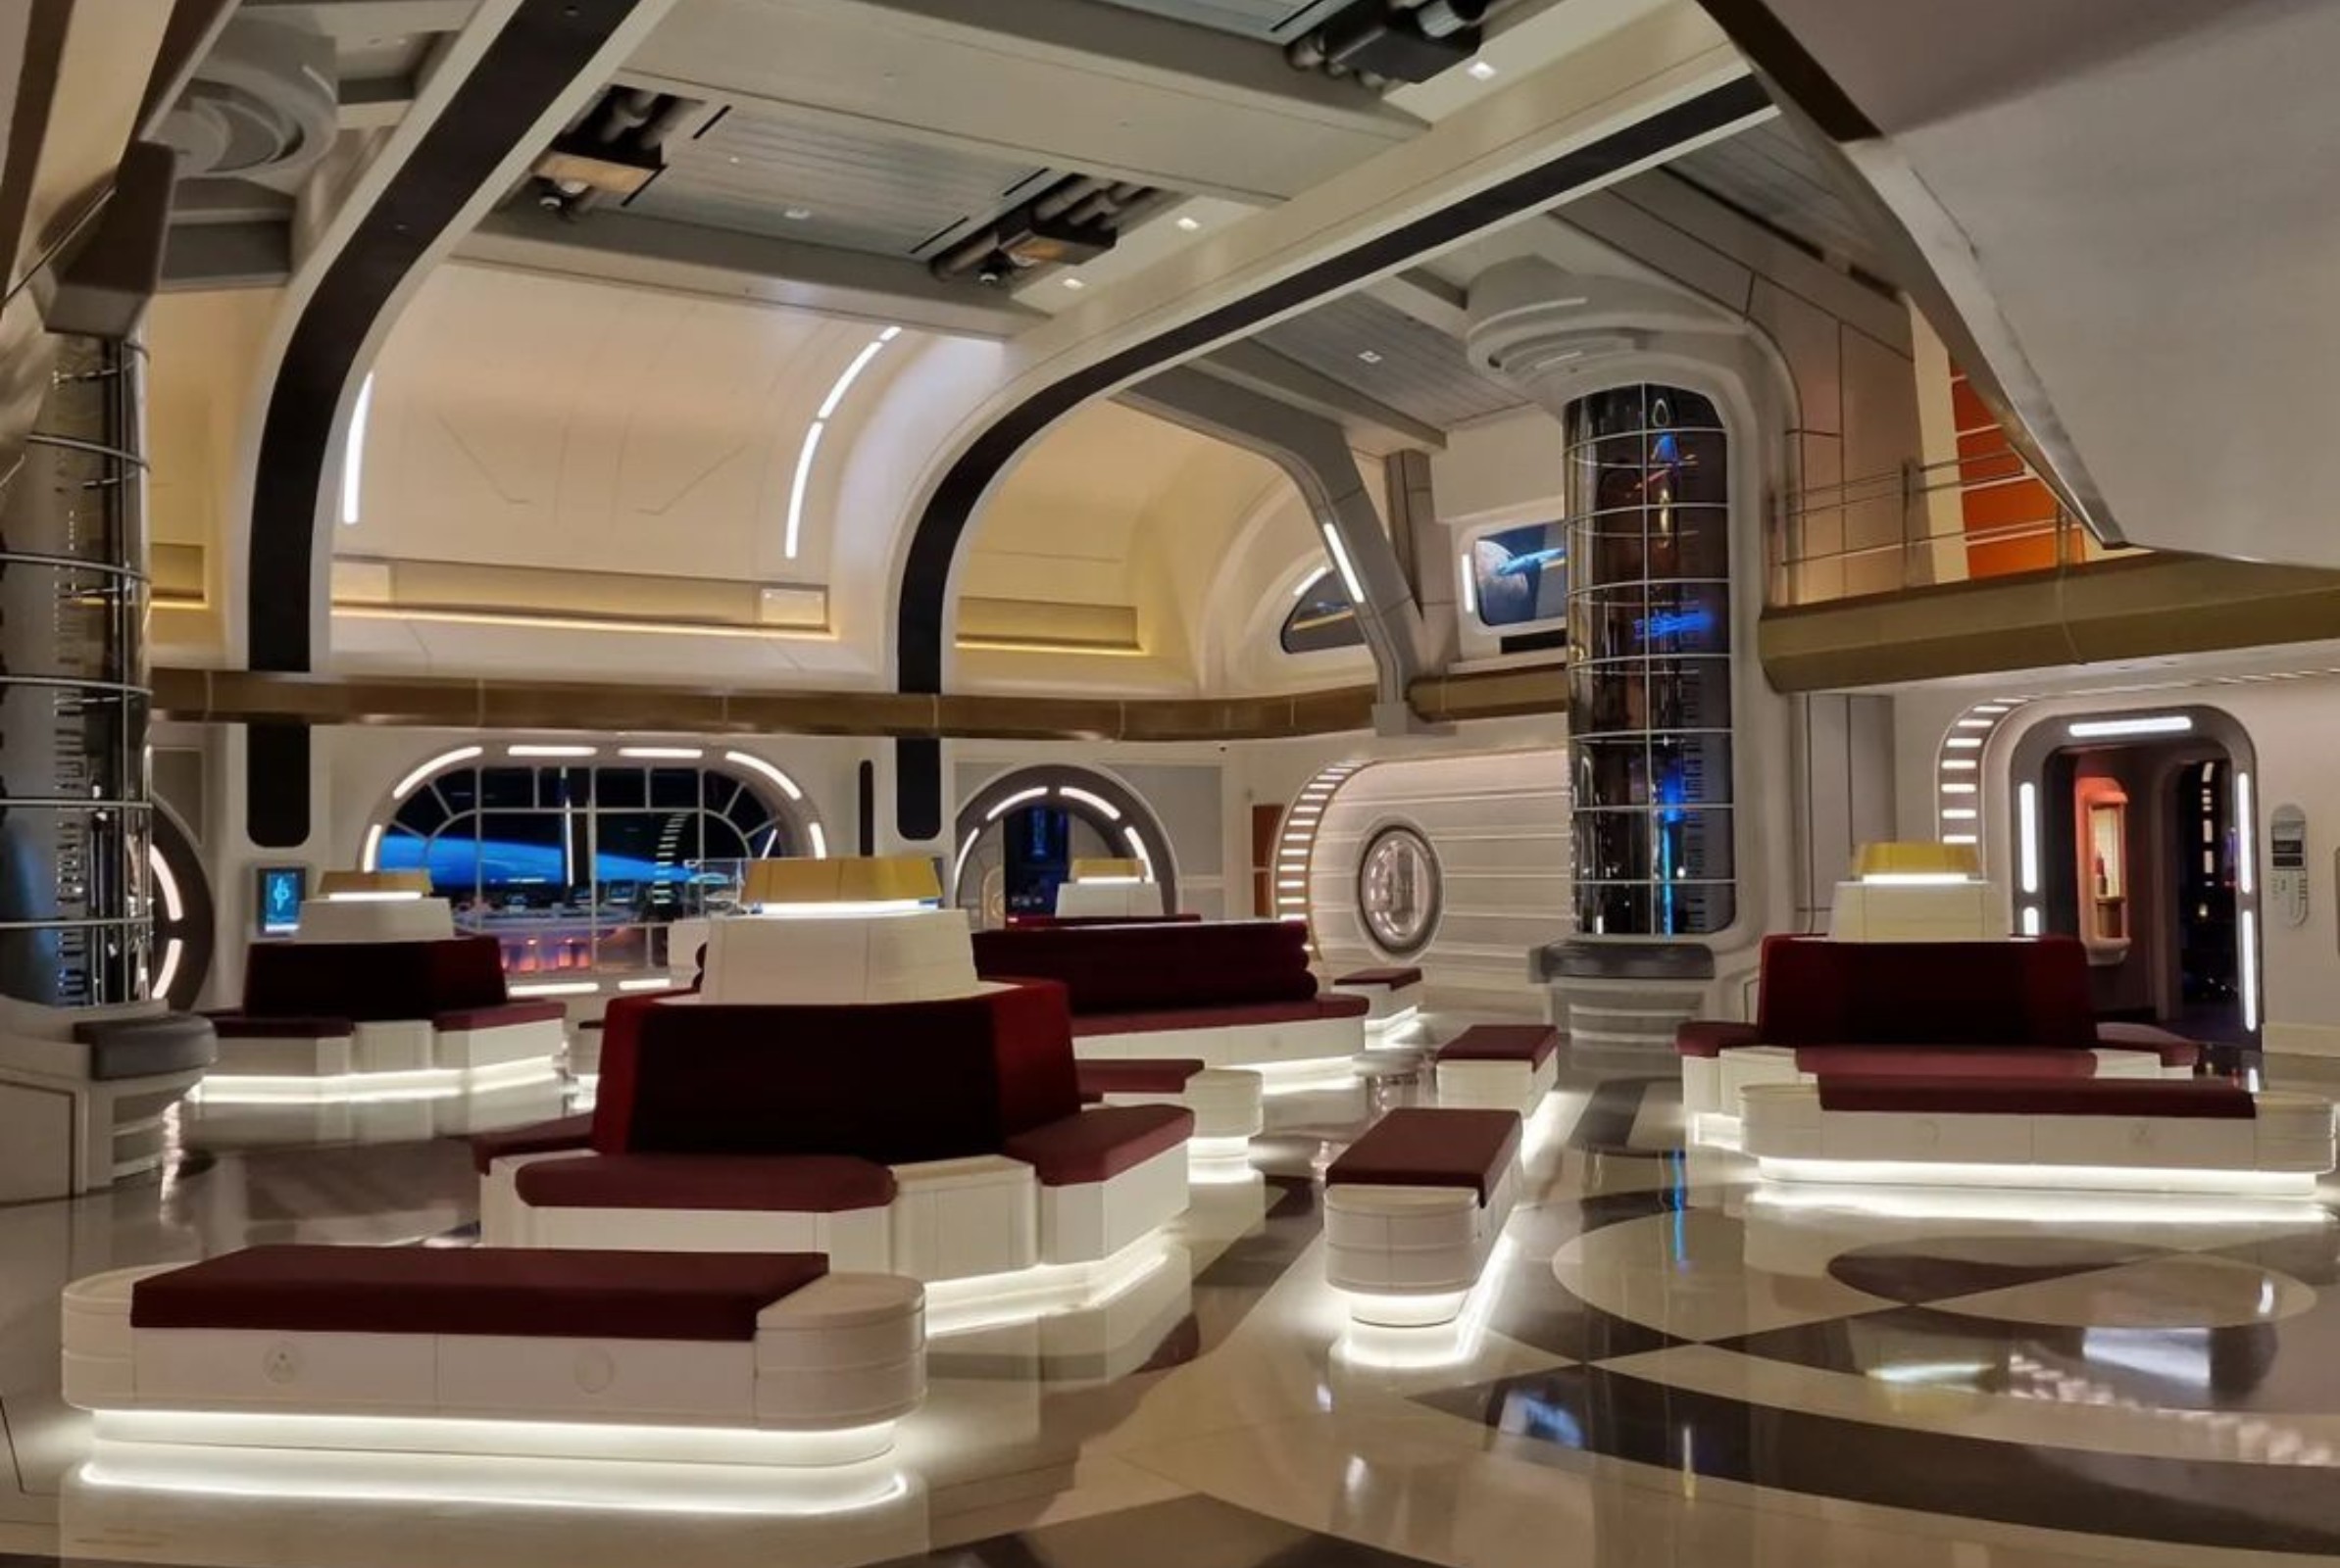 Disney's Star Wars Galactic Starcruiser Hotel